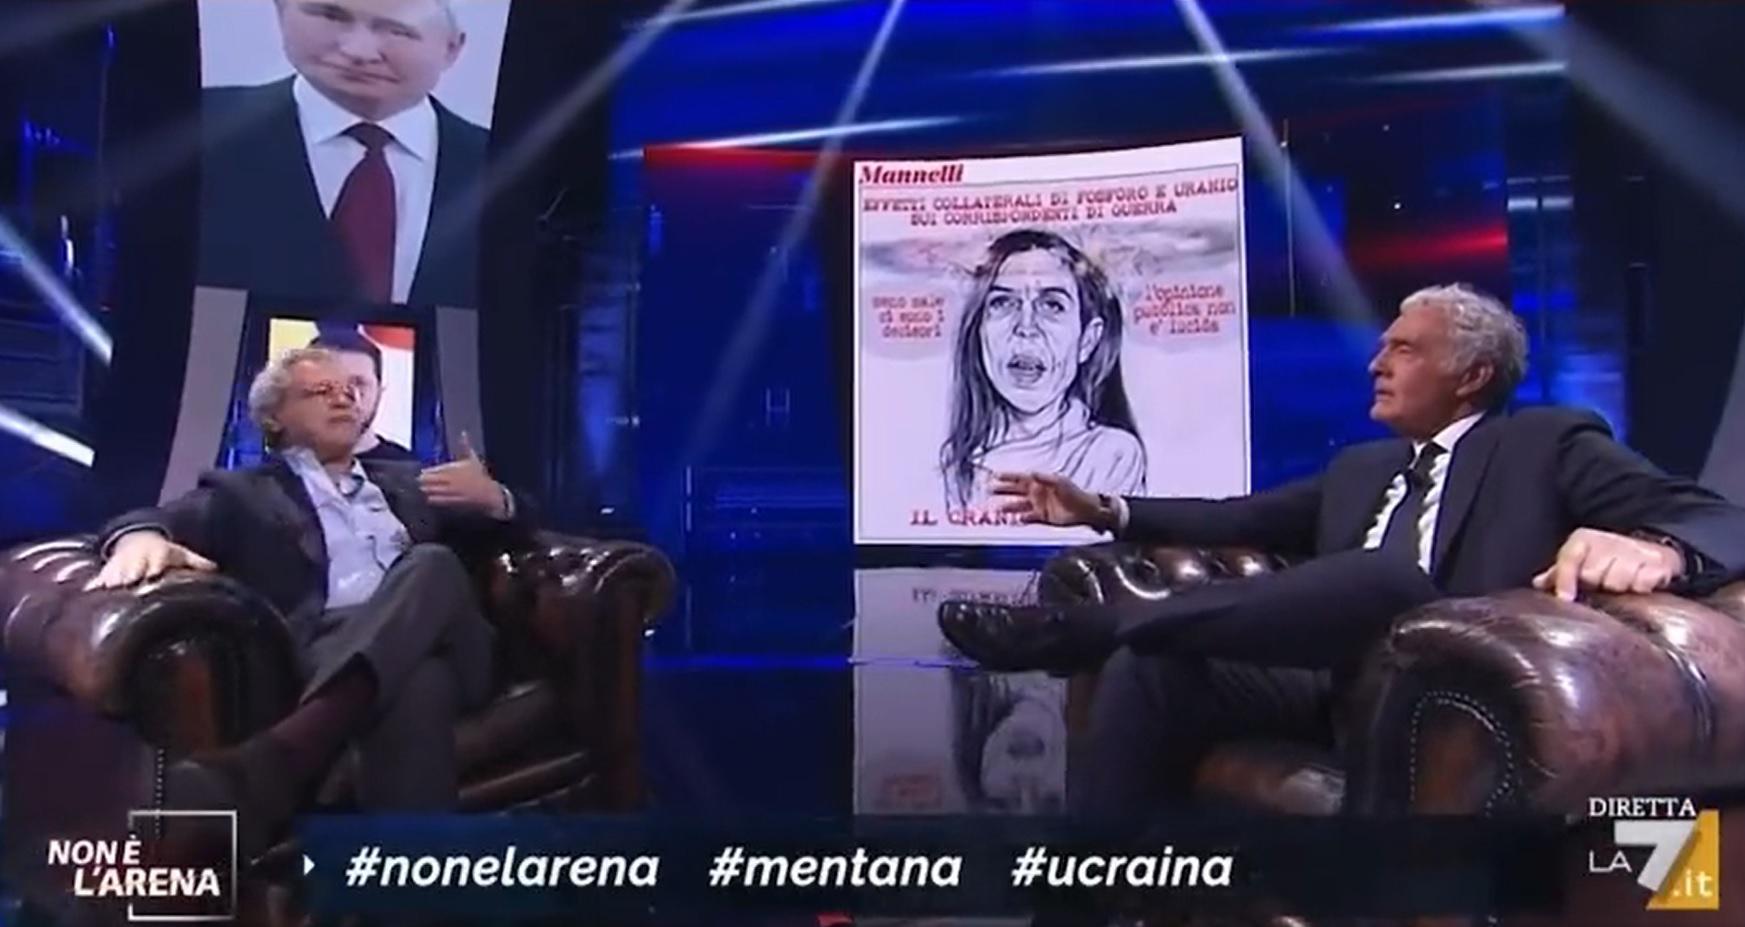 Cartoon about Francesca Manucci, Enrico Mentana: “It sucks”